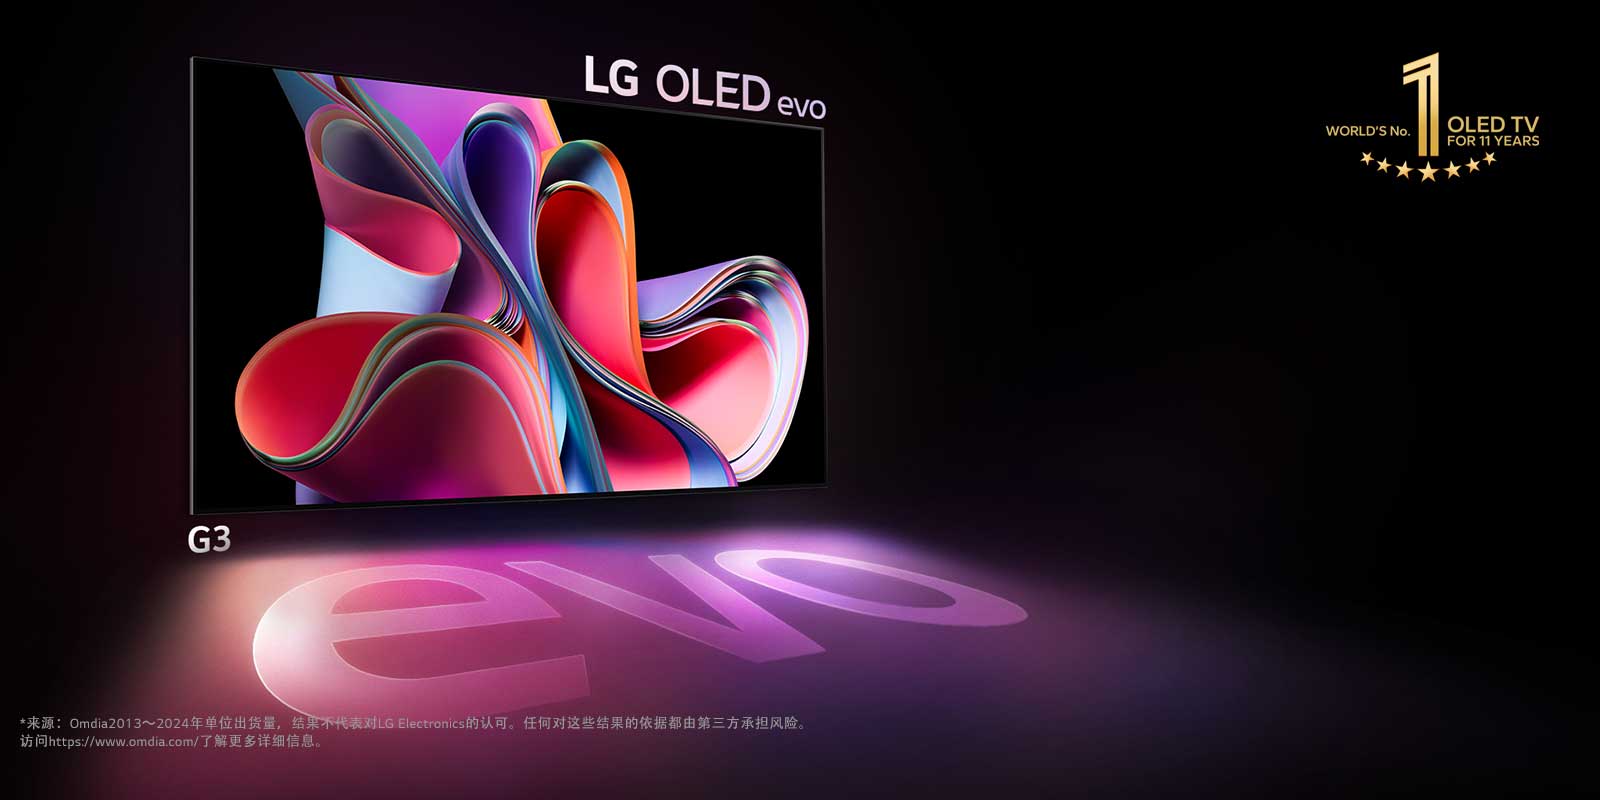 LG OLED G3 在黑色背景下显示了亮粉色和紫色的抽象图片。显示器投射出彩色的阴影，上面有“evo”字样。图像的左上角有“10 年世界第一的 OLED 电视”的标志。